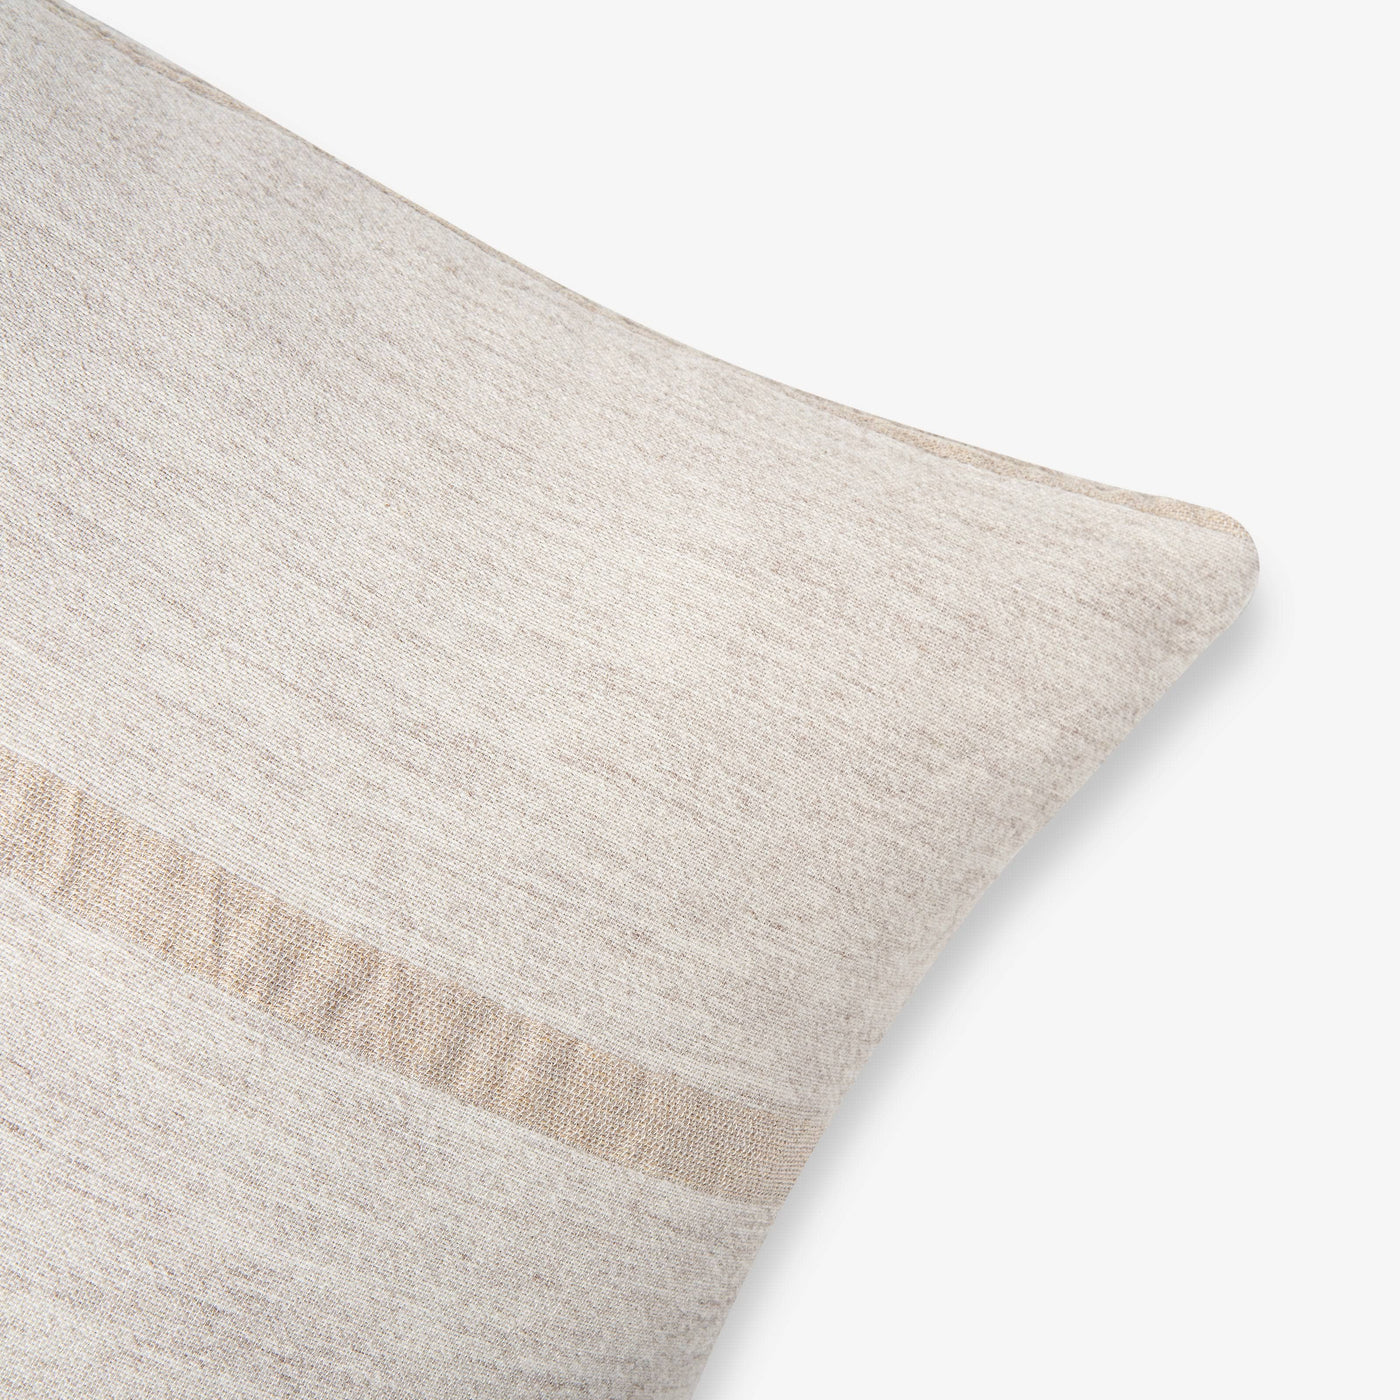 Andreo Cushion Cover, Grey - Beige, 40x60 cm Cushion Covers sazy.com